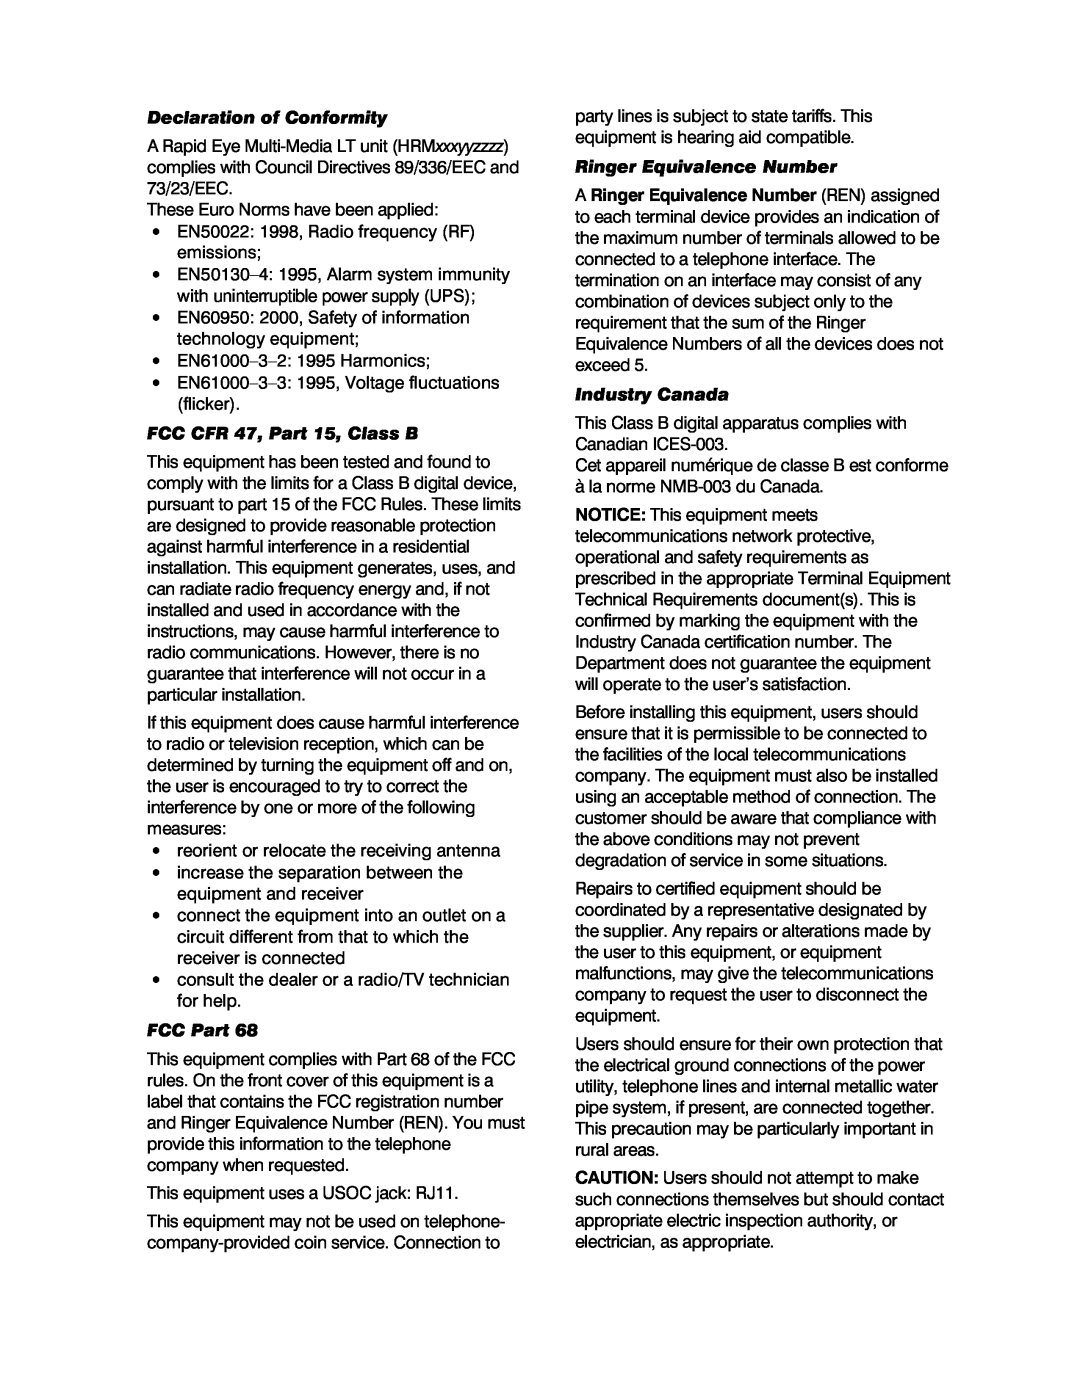 Honeywell K9696V2 Declaration of Conformity, FCC CFR 47, Part 15, Class B, FCC Part, Ringer Equivalence Number 